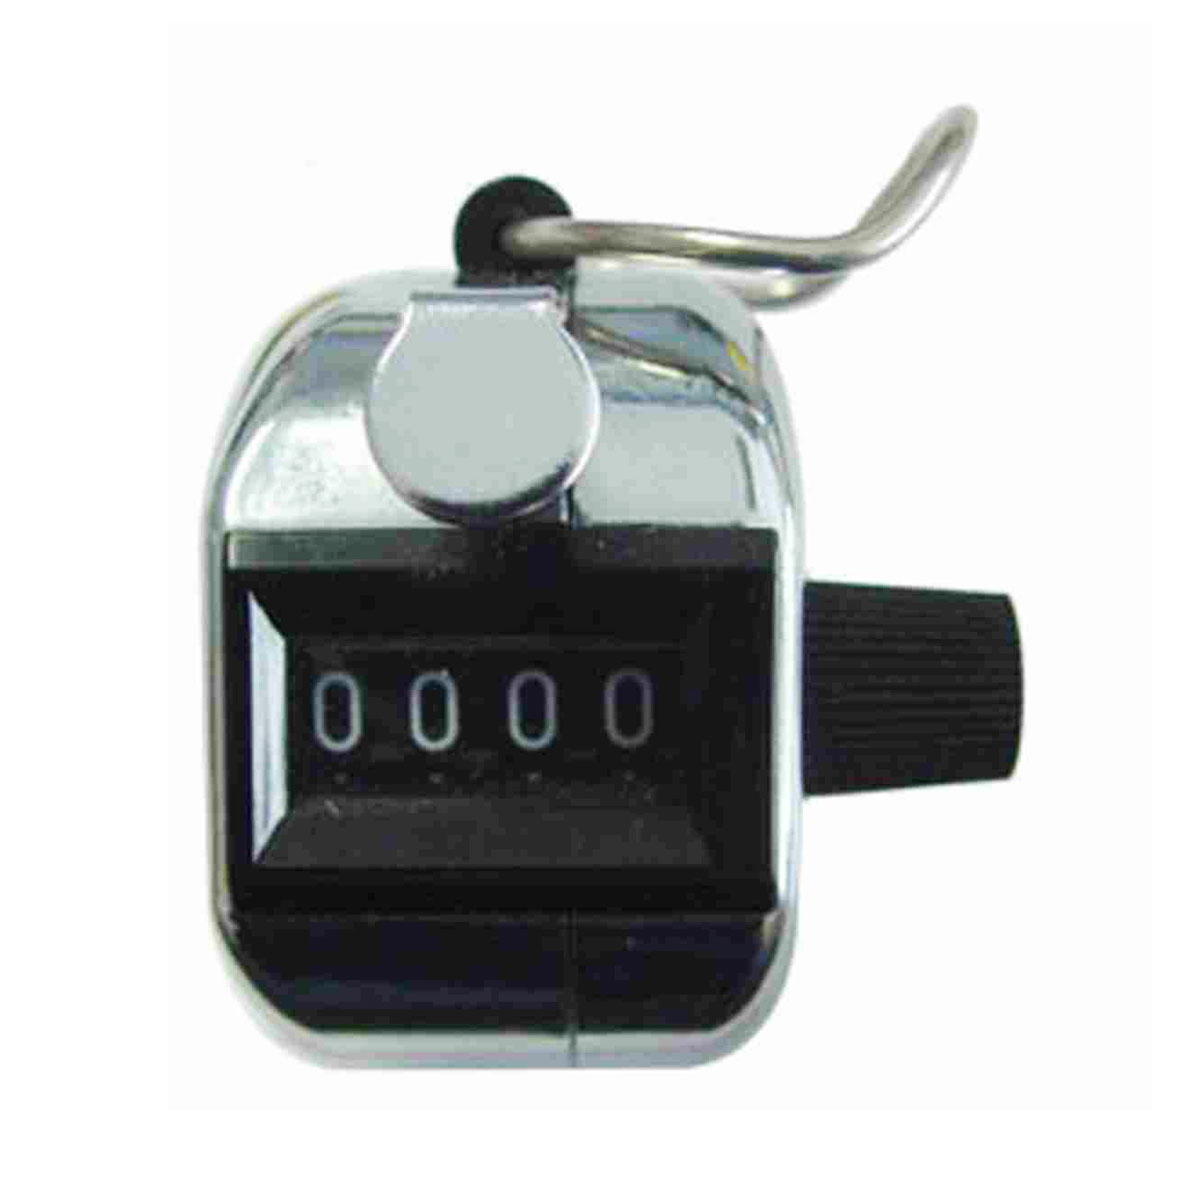 Handstückzähler, 4-stellig, 9 999 Metallgehäuse mit Ring